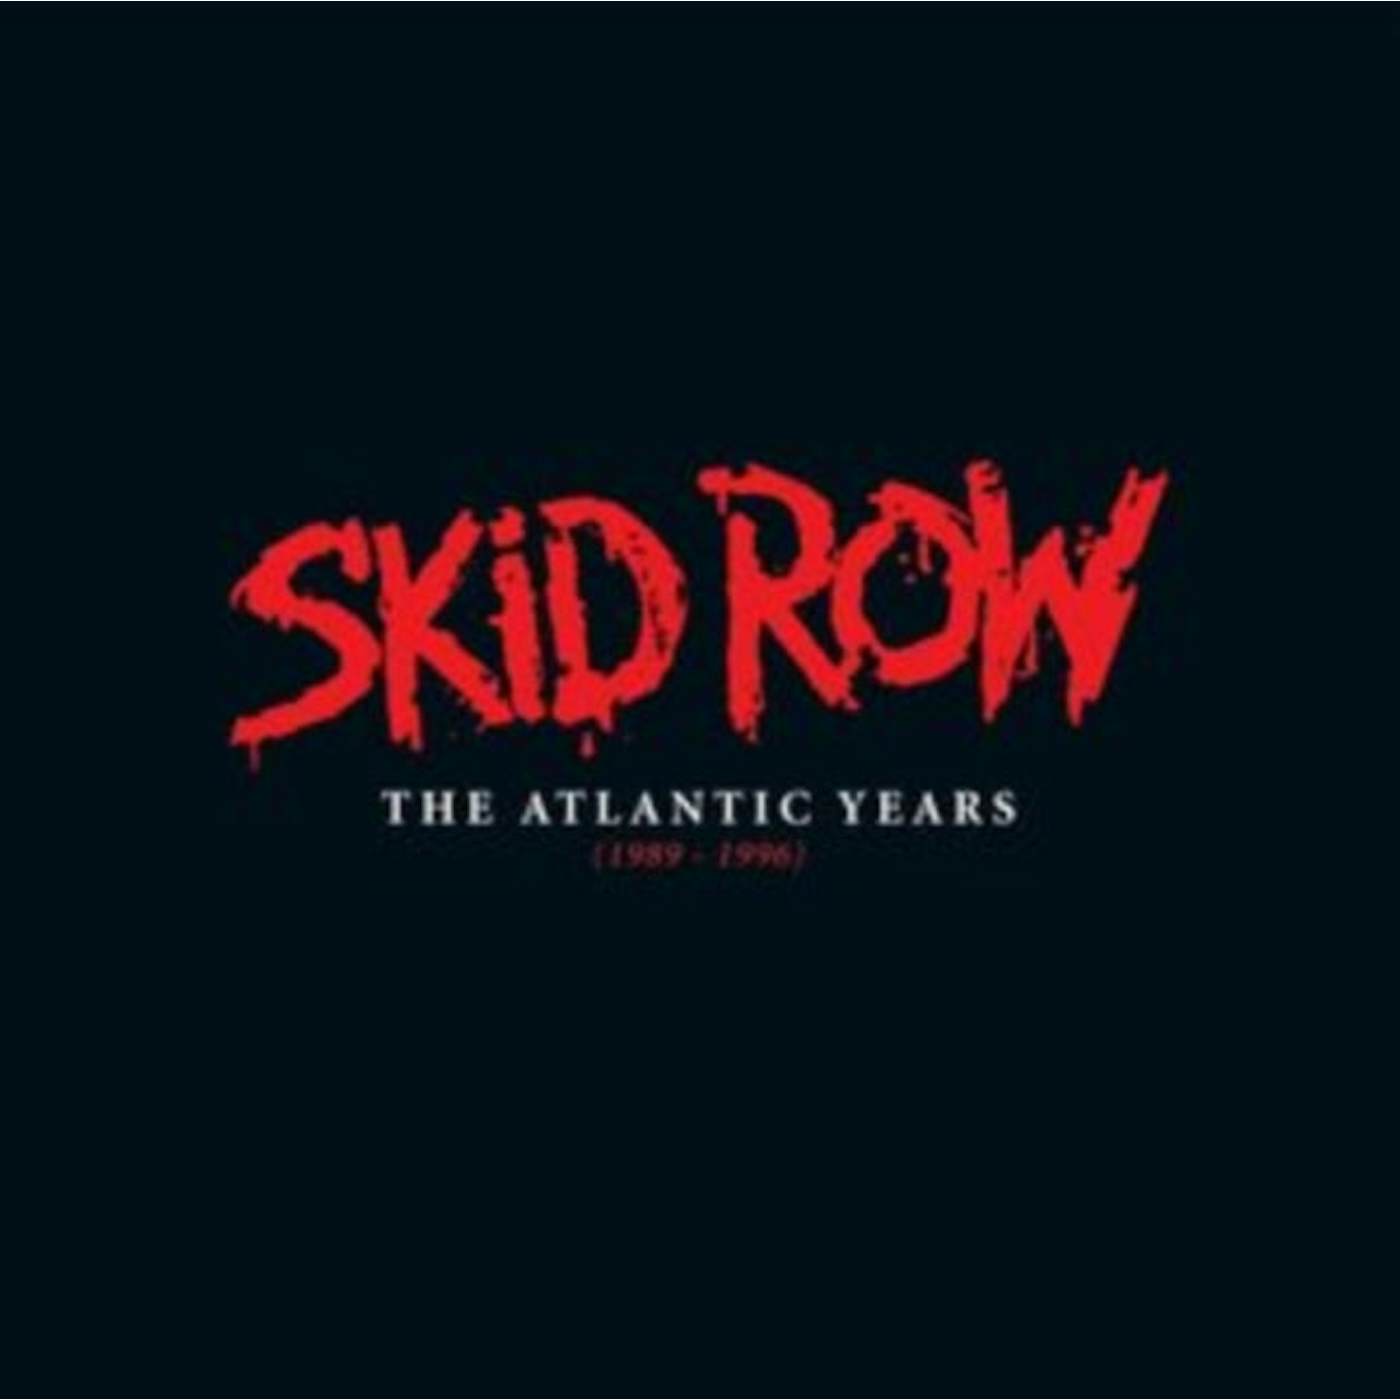 Skid Row LP Vinyl Record - The Atlantic Years (19 89-19 96)